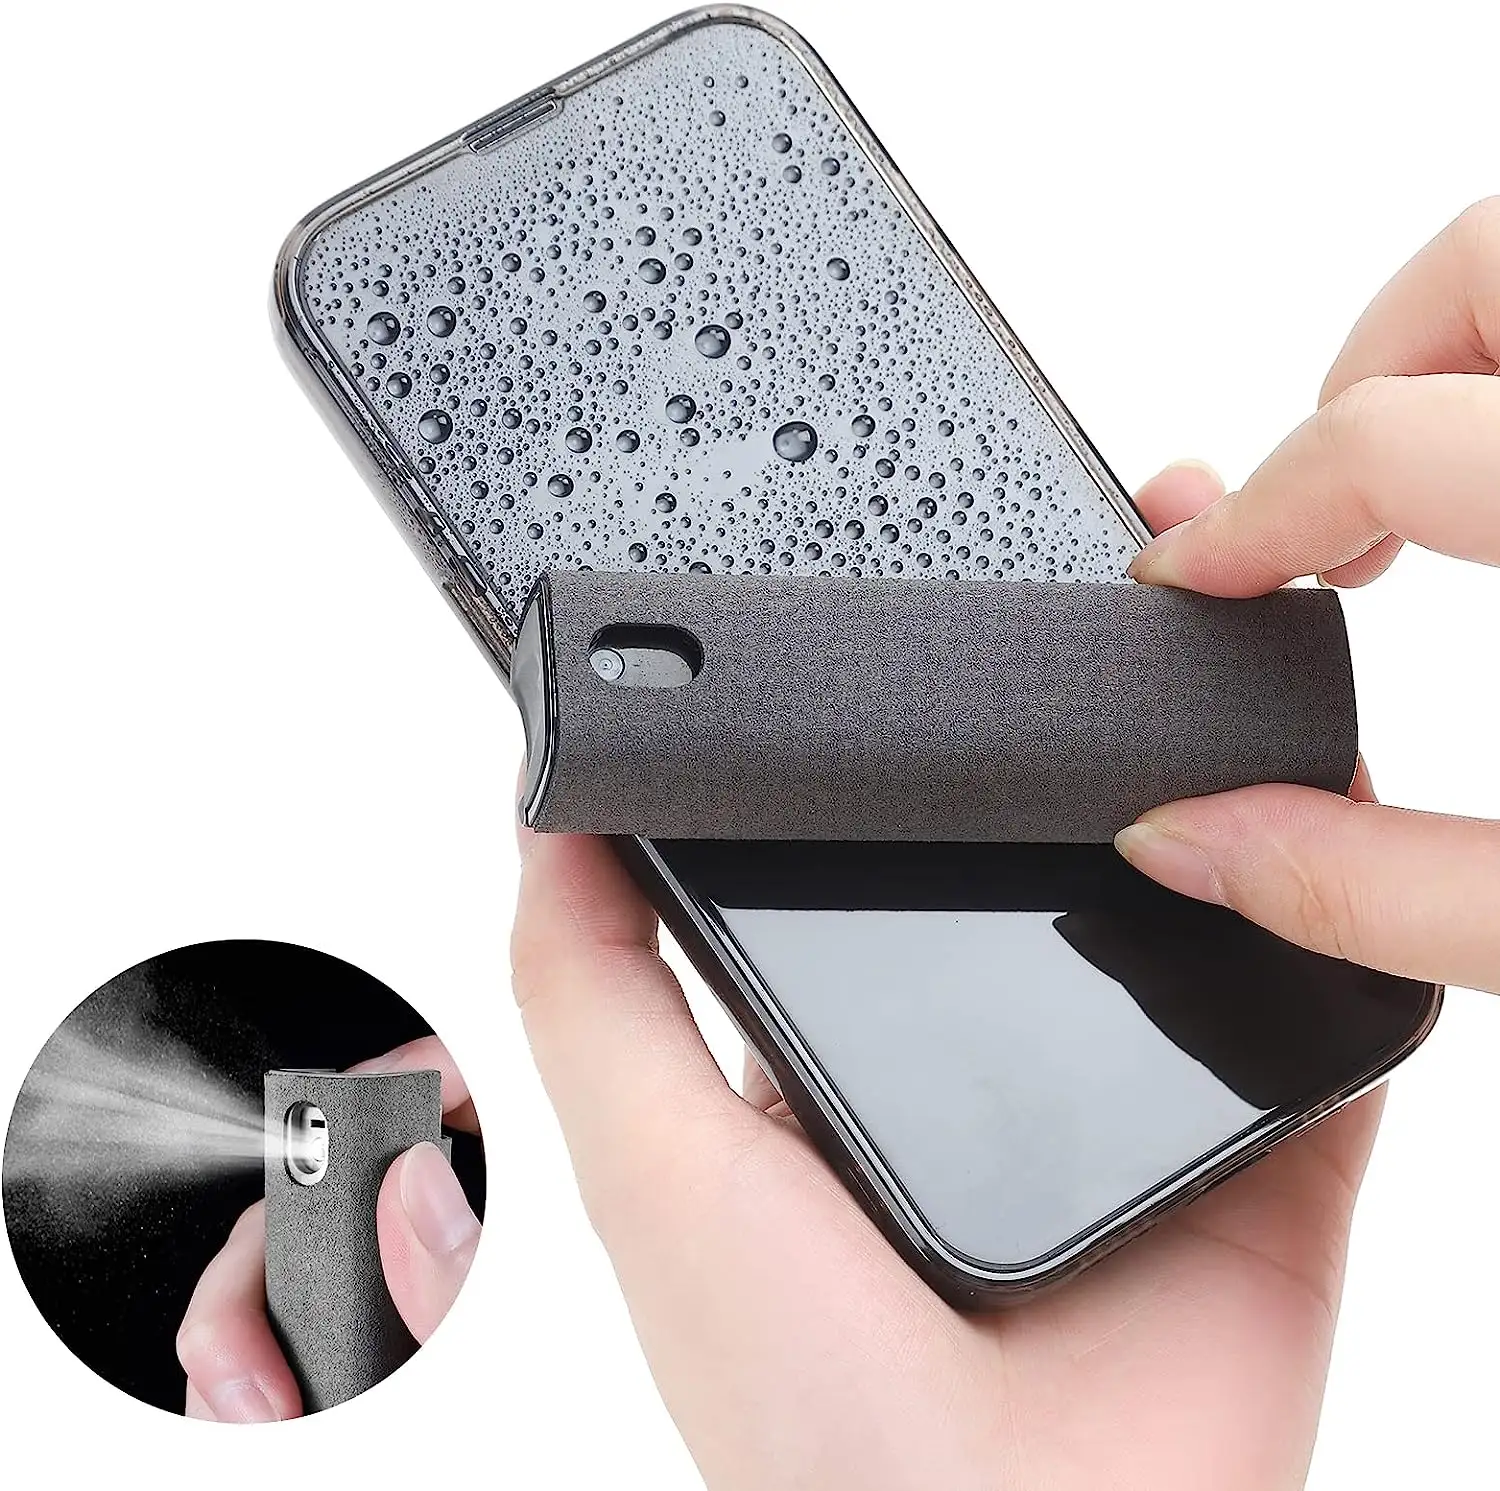 2023 OPULA newest 2 in 1 phone screen cleaner spray display screen cleaning kit microfiber smart phone screen cleaner kit